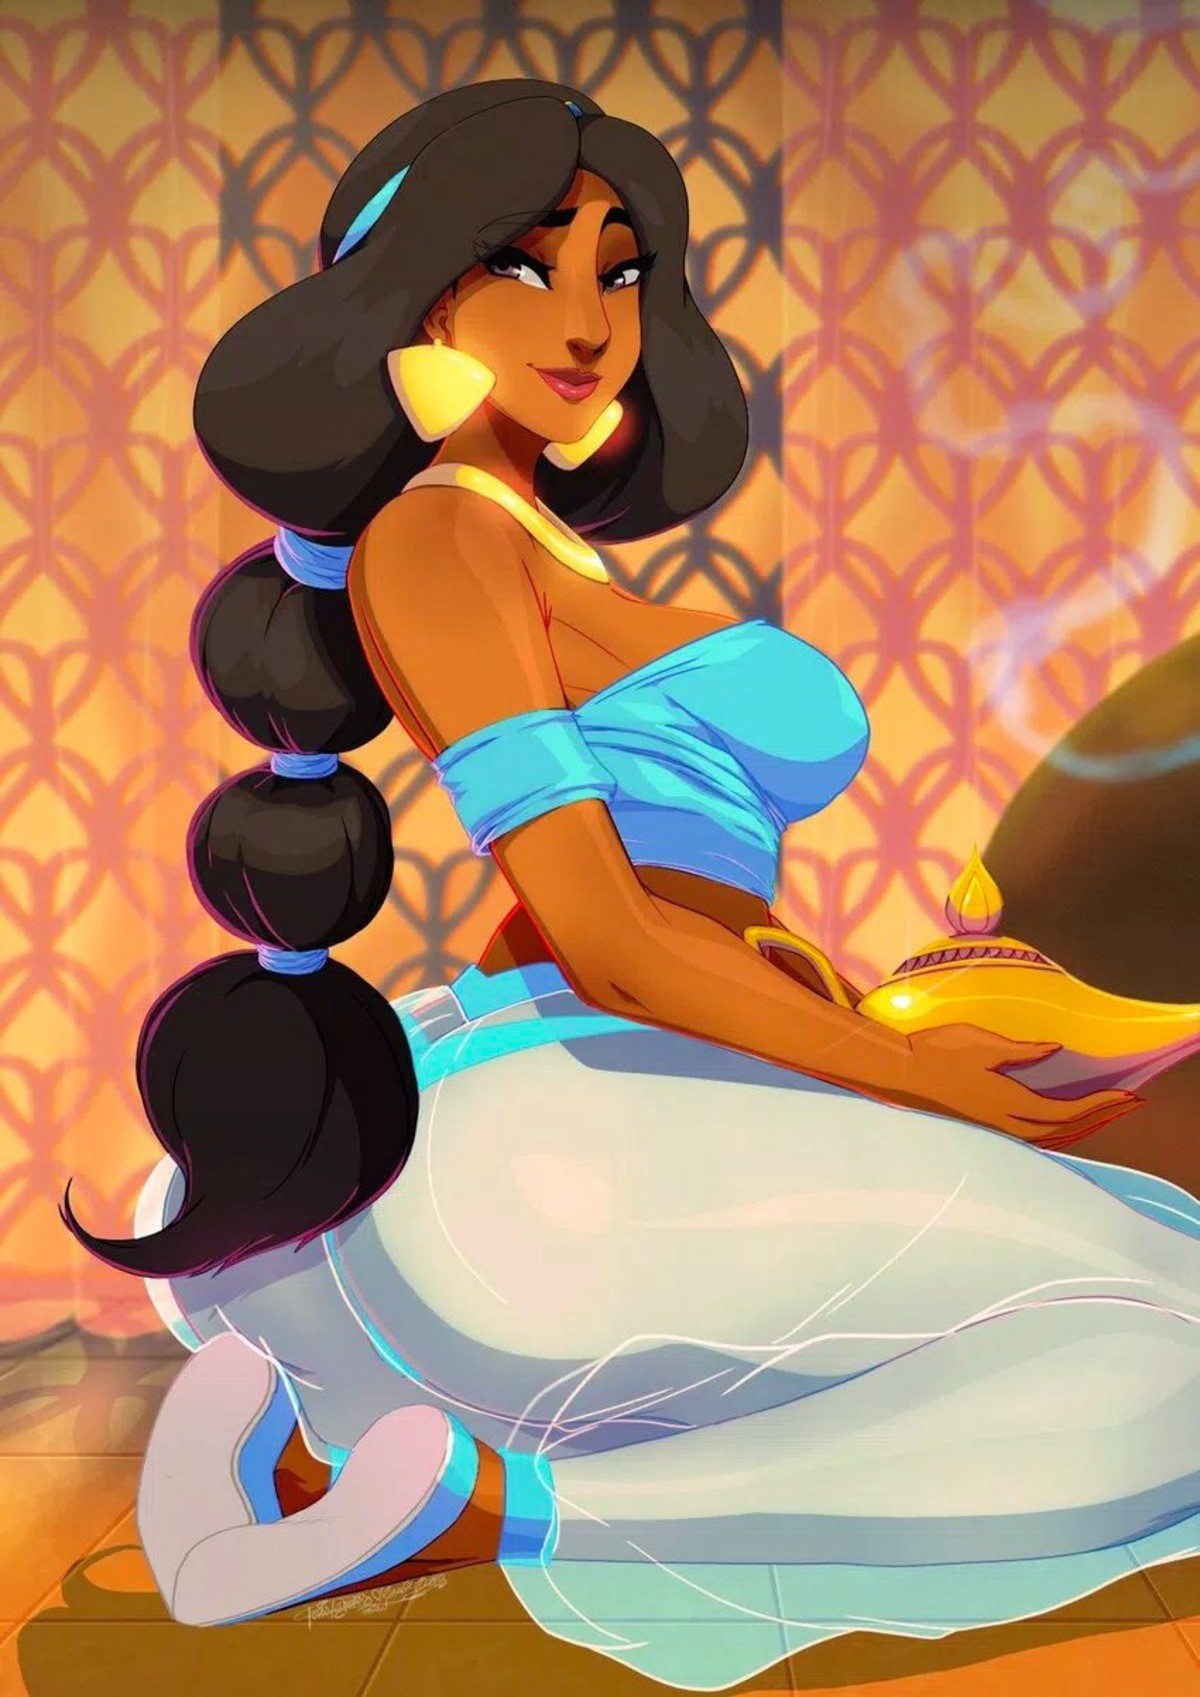 Порно видео с Princess Jasmine Принцеса Жасмин